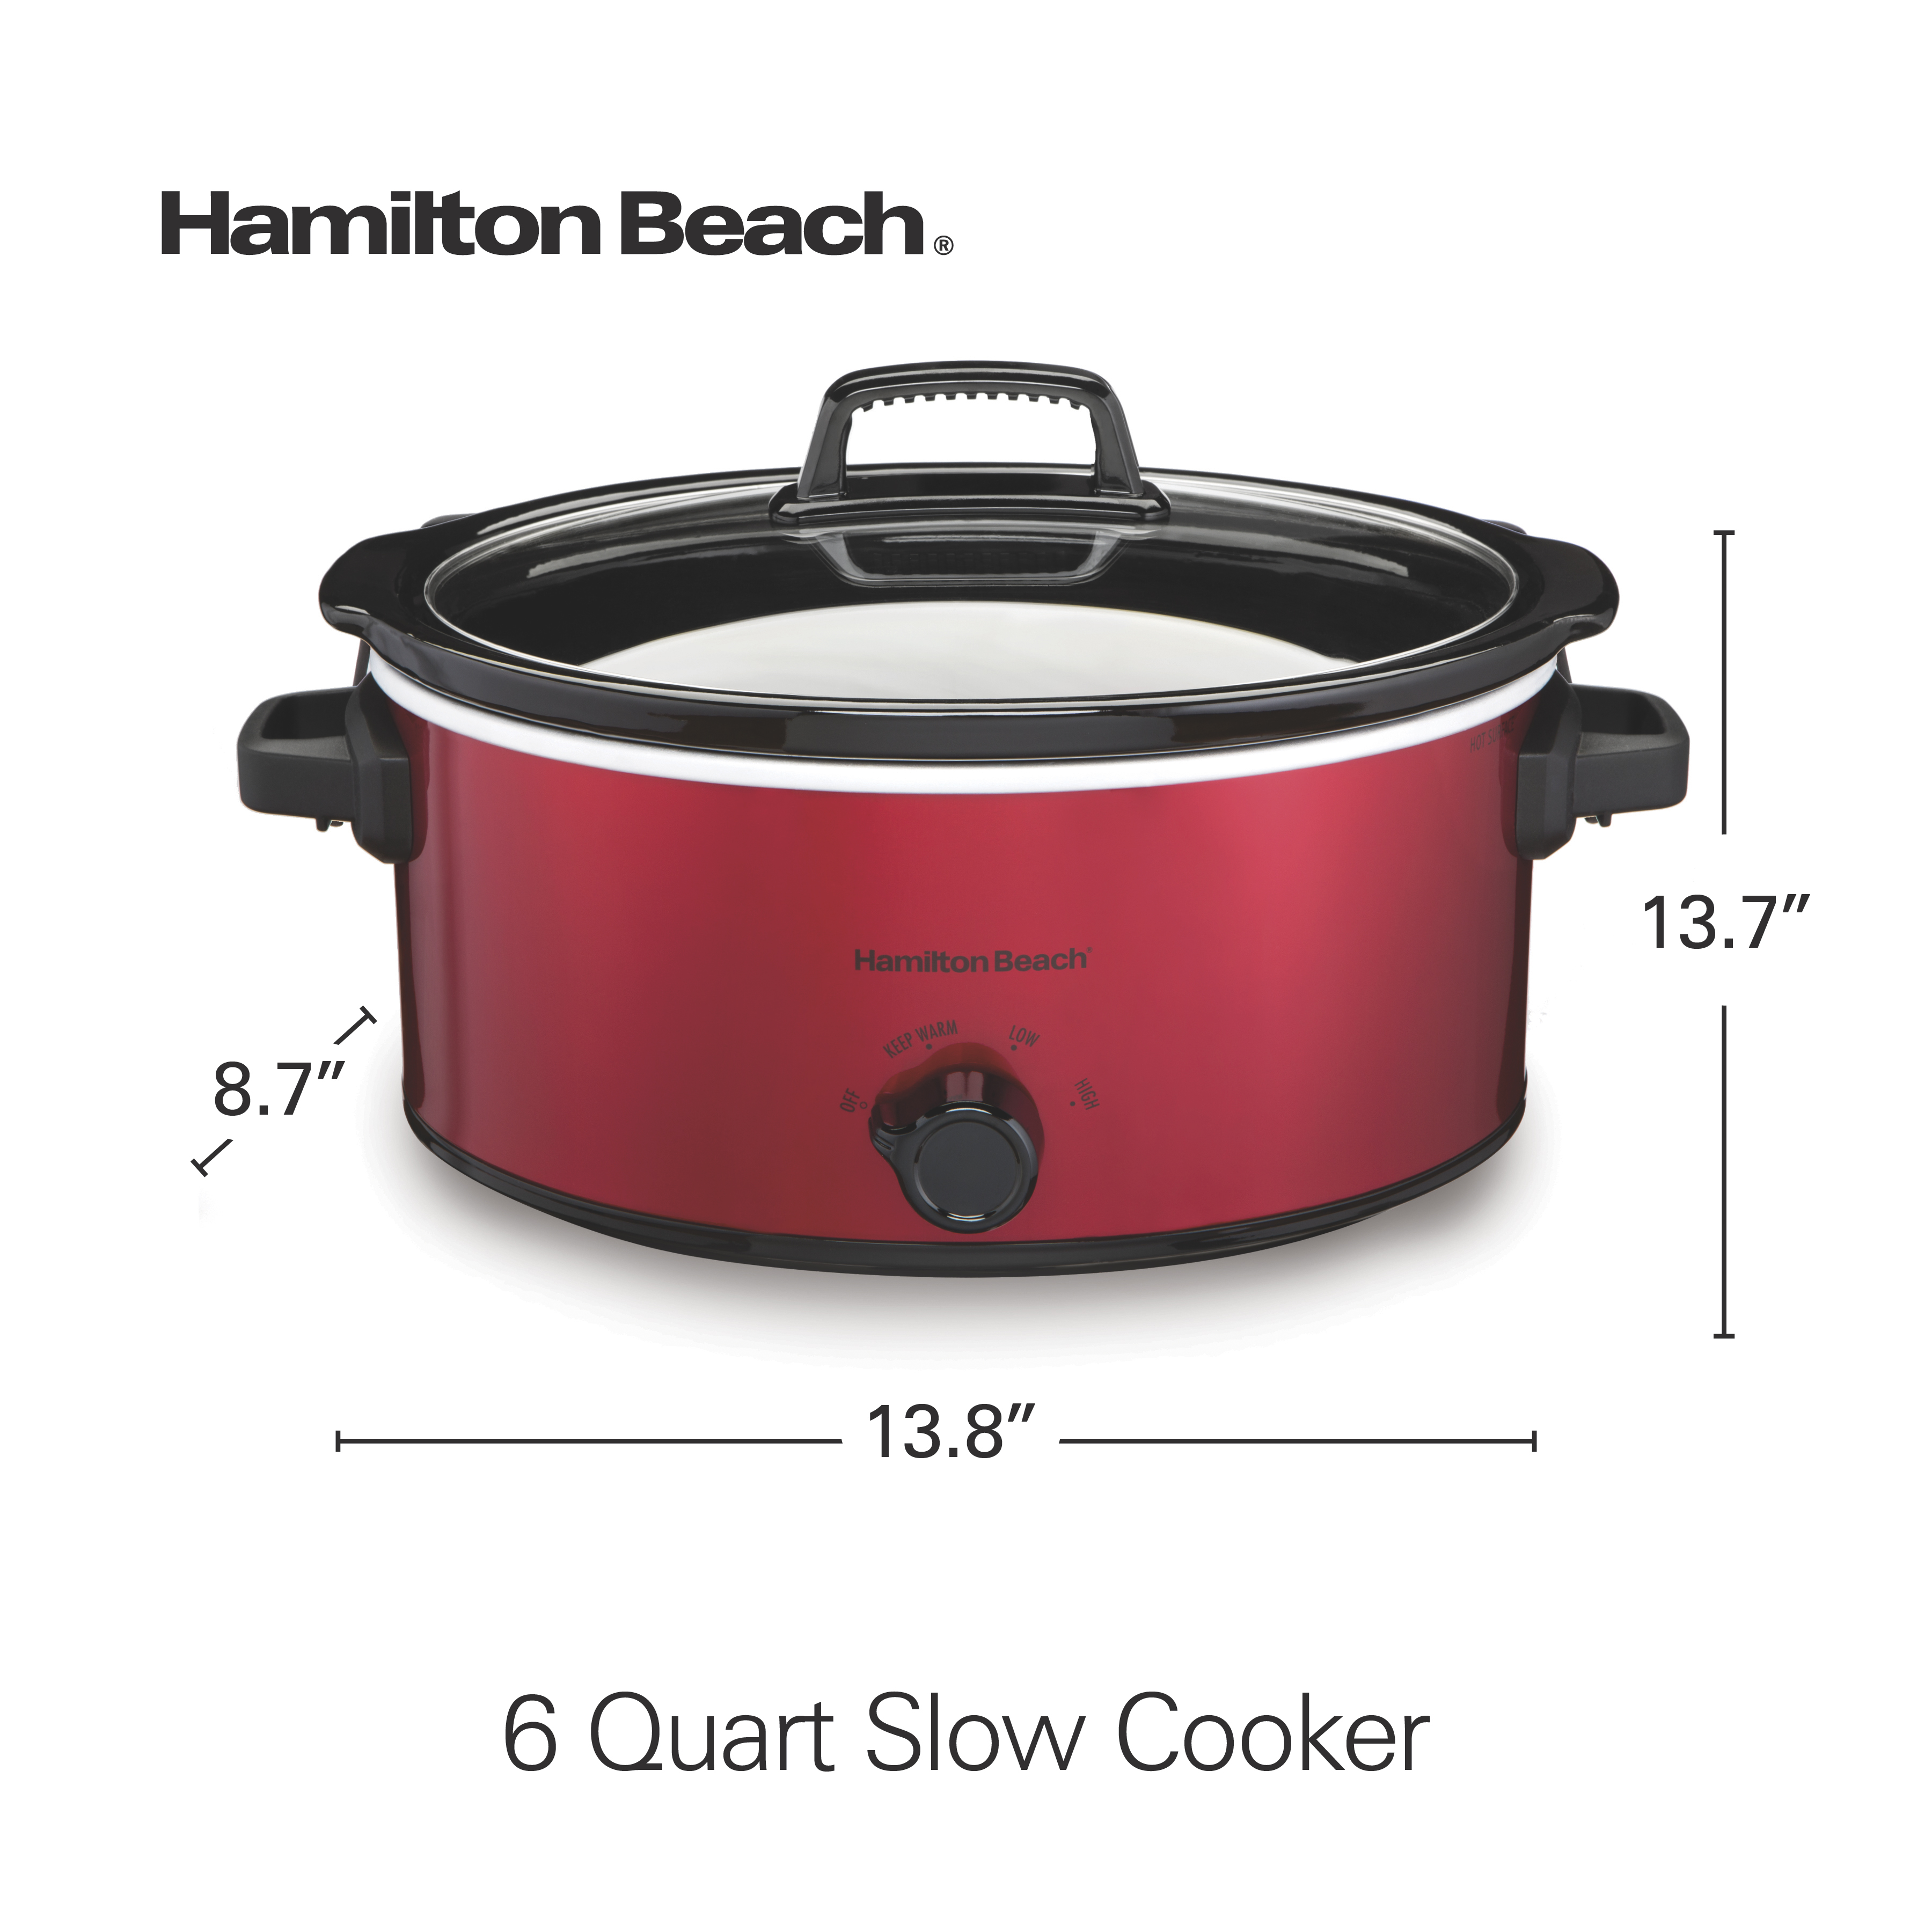 Hamilton Beach Slow Cooker, 6 Quart Capacity, Large Capacity, Serves 7+, Dishwasher-Safe Removable Crock, Red, 33666 - image 6 of 8